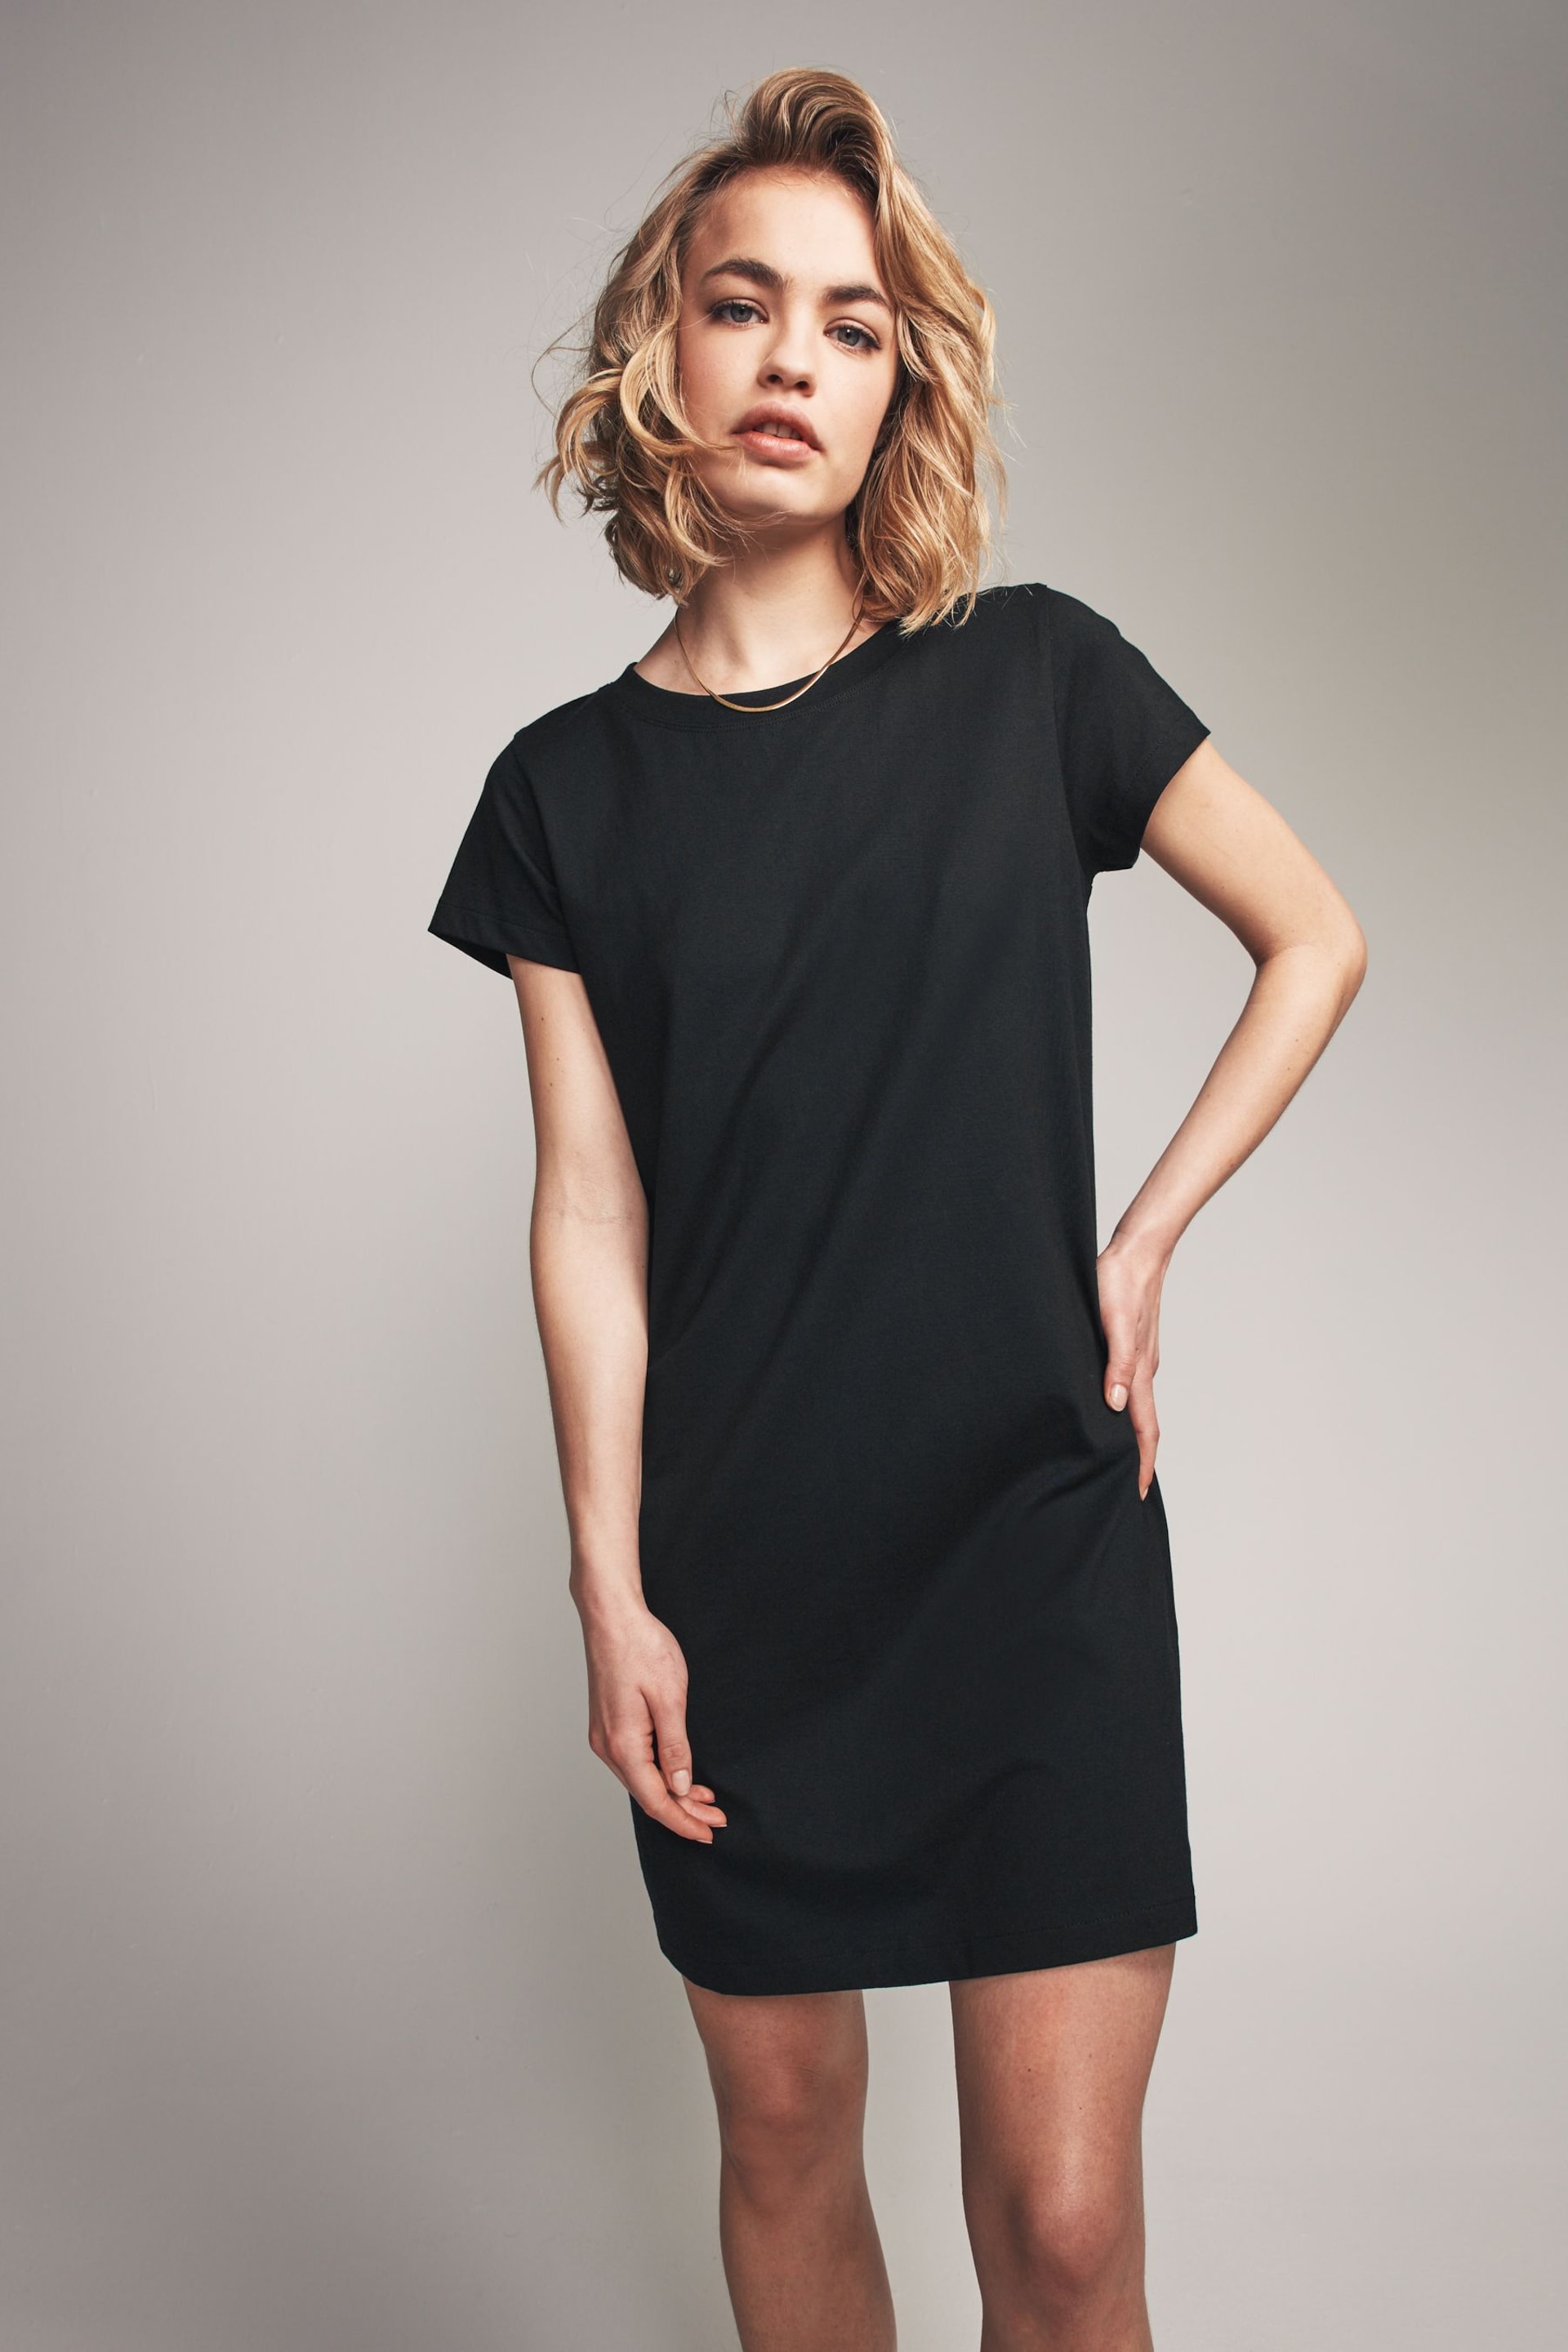 The Set Black/Grey/White Stripe Short Sleeve T-Shirt Dress 3 Pack - Image 2 of 8